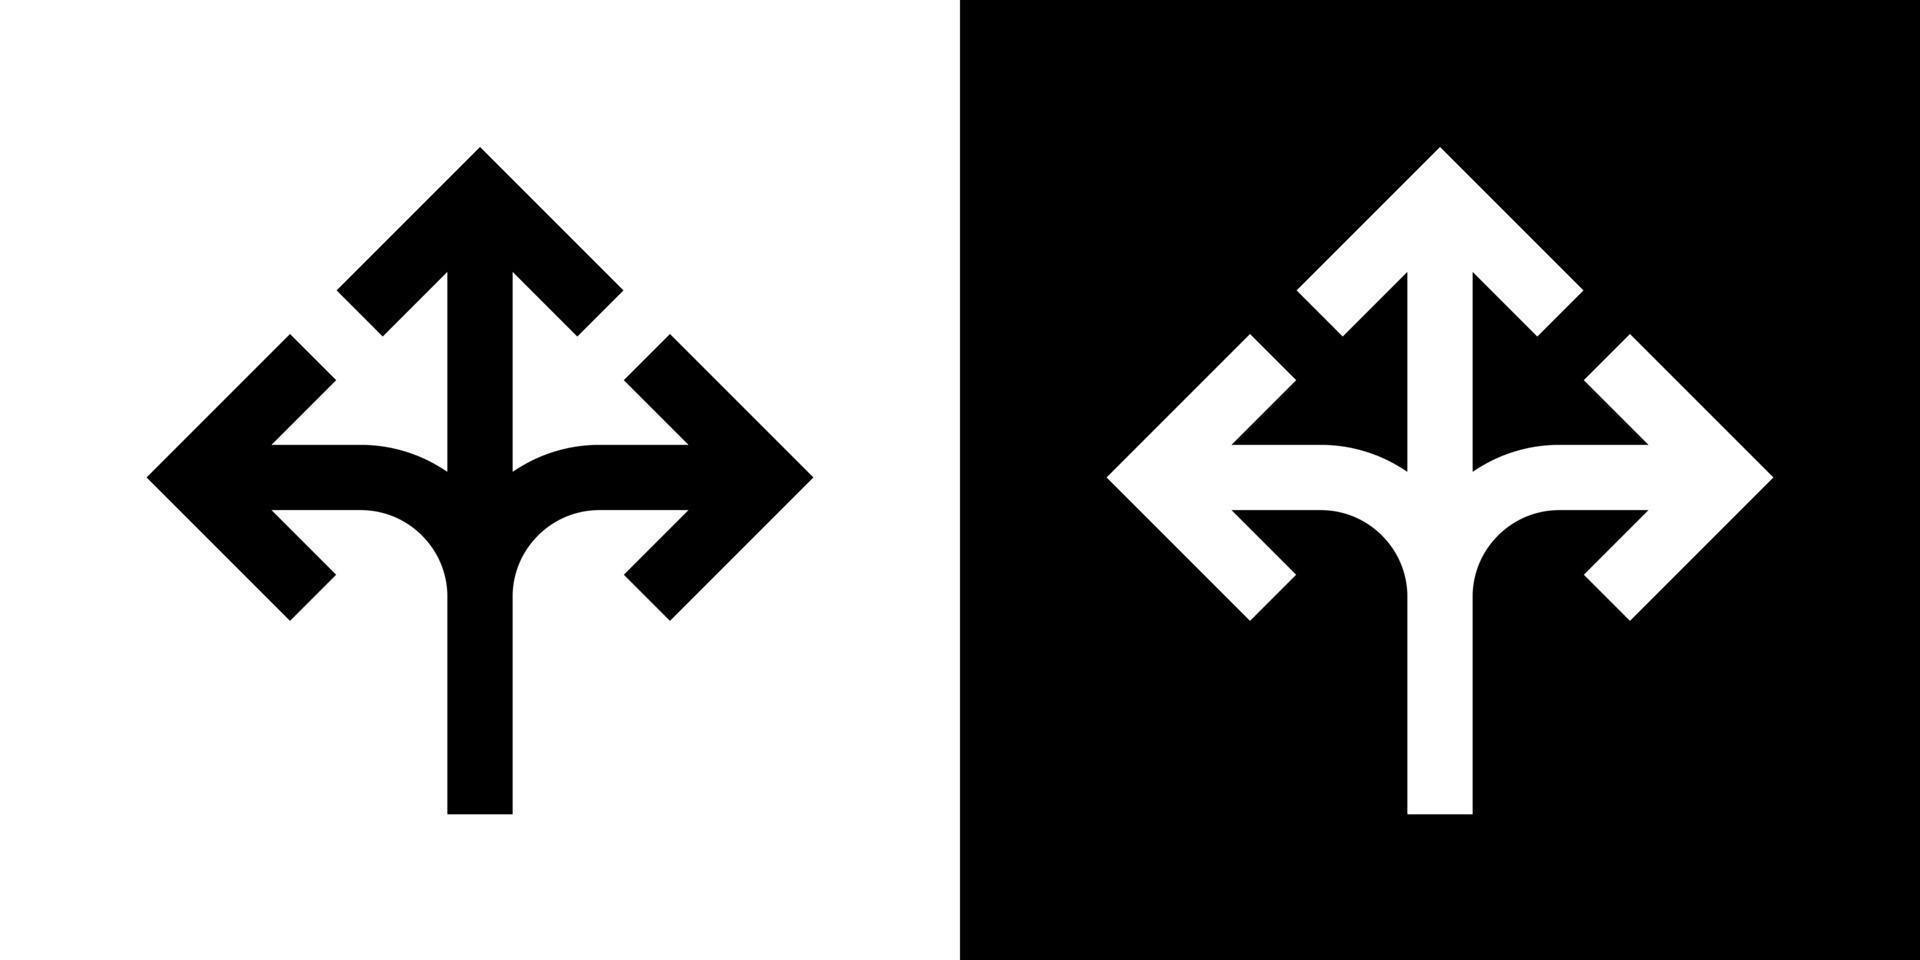 trekant riktning pil ikon vektor i ClipArt stil